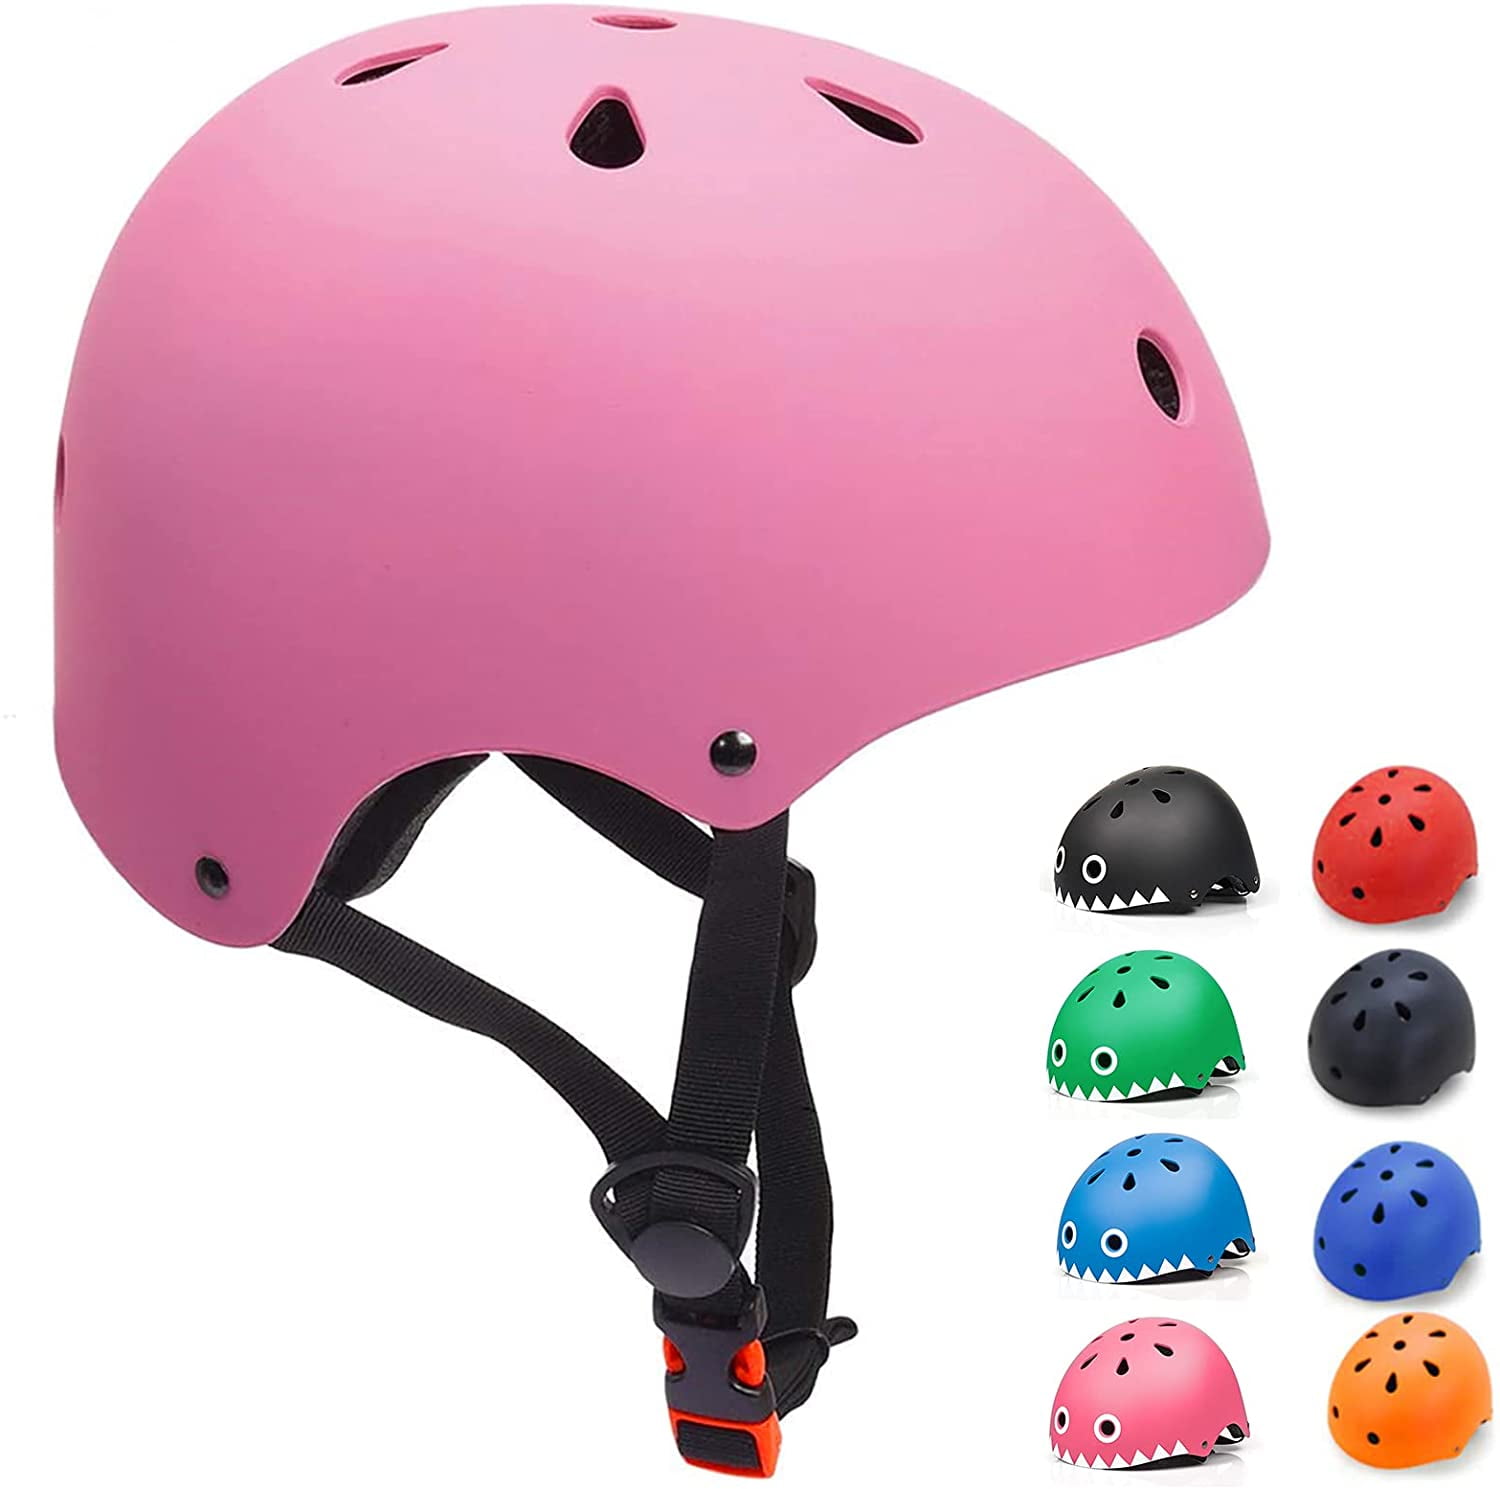 Safety Helmet for Skate Skateboard BMX Scooter Bike Cycling CE Certificated 